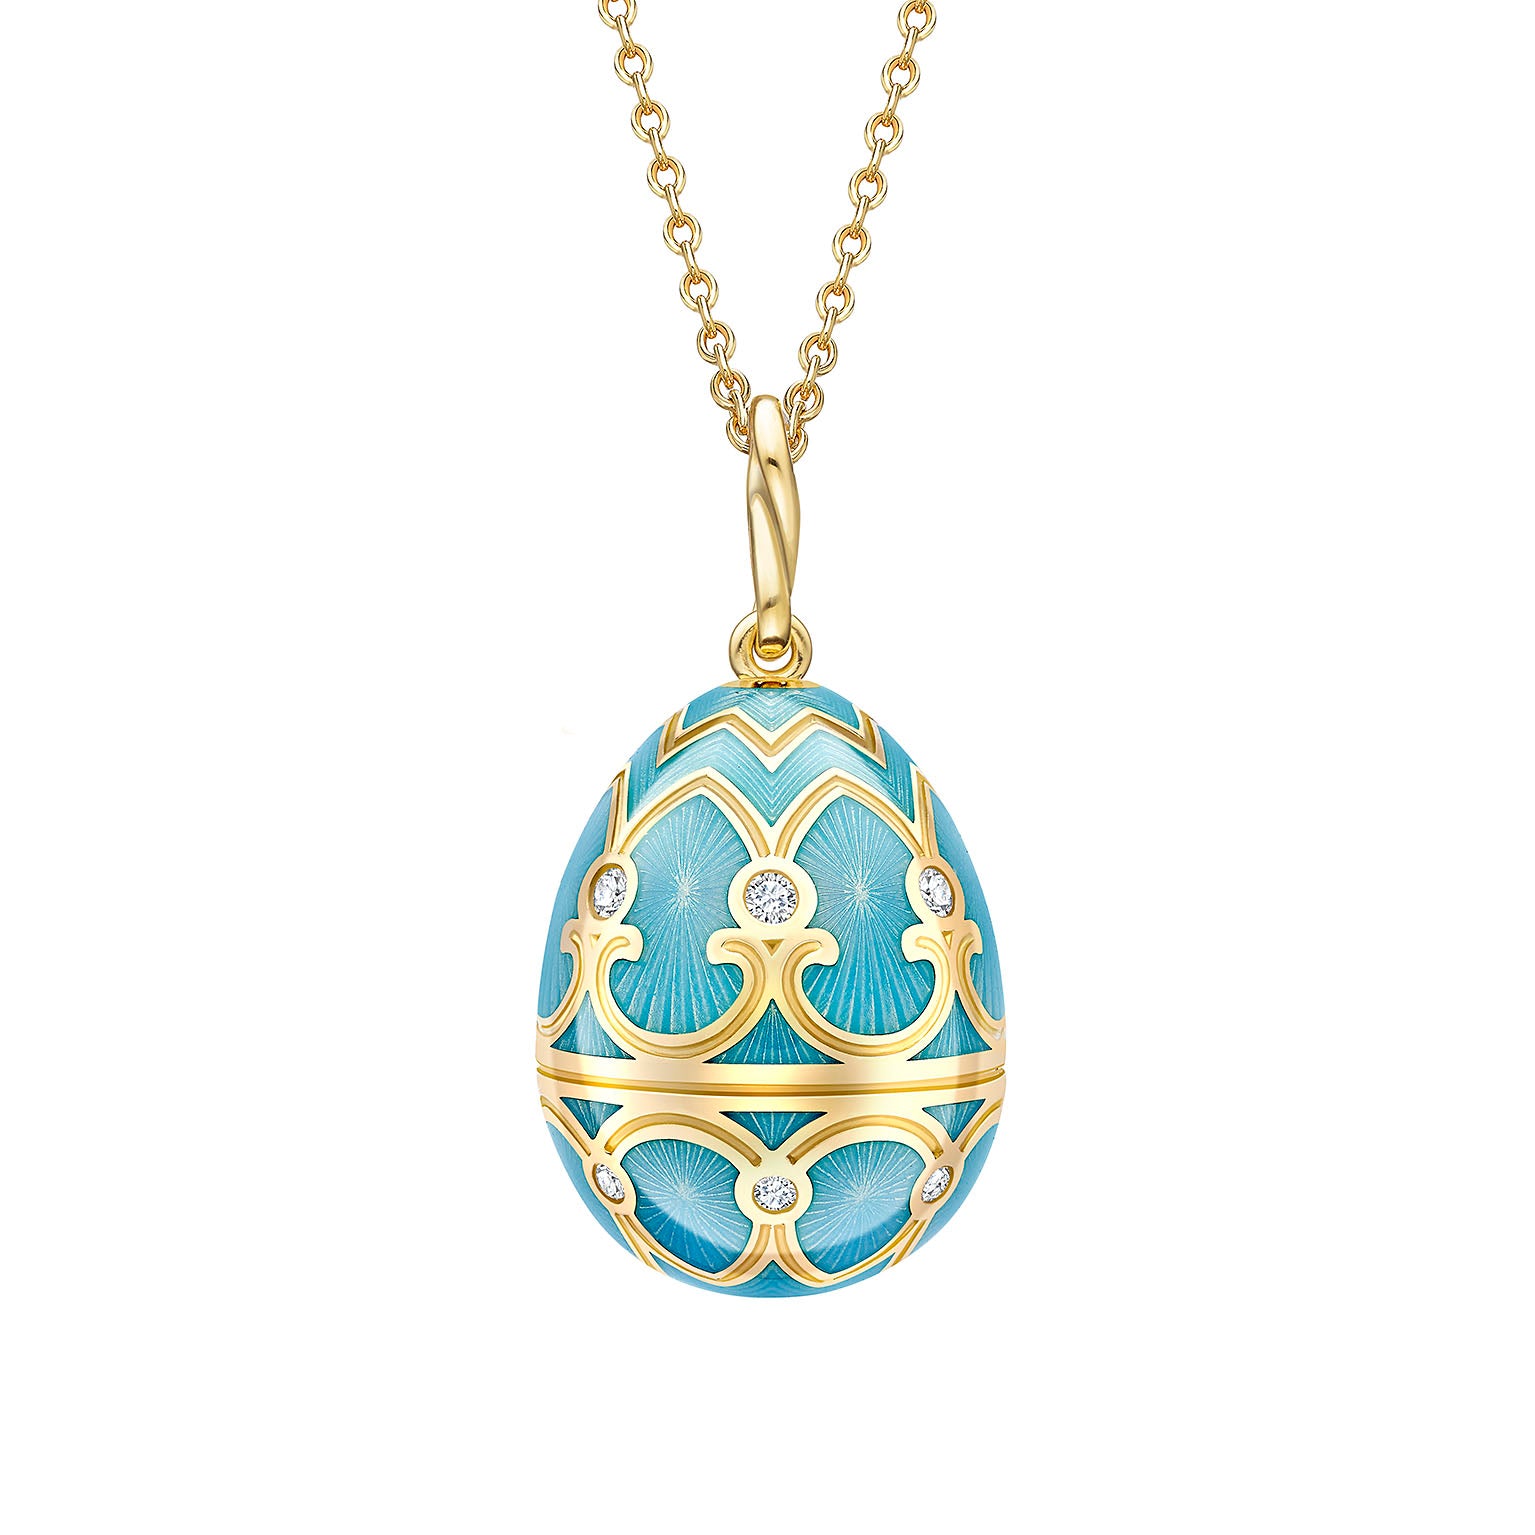 Heritage-Yellow-Gold-Diamond-&-Turquoise-Guilloché-Enamel-Egg-Pendant